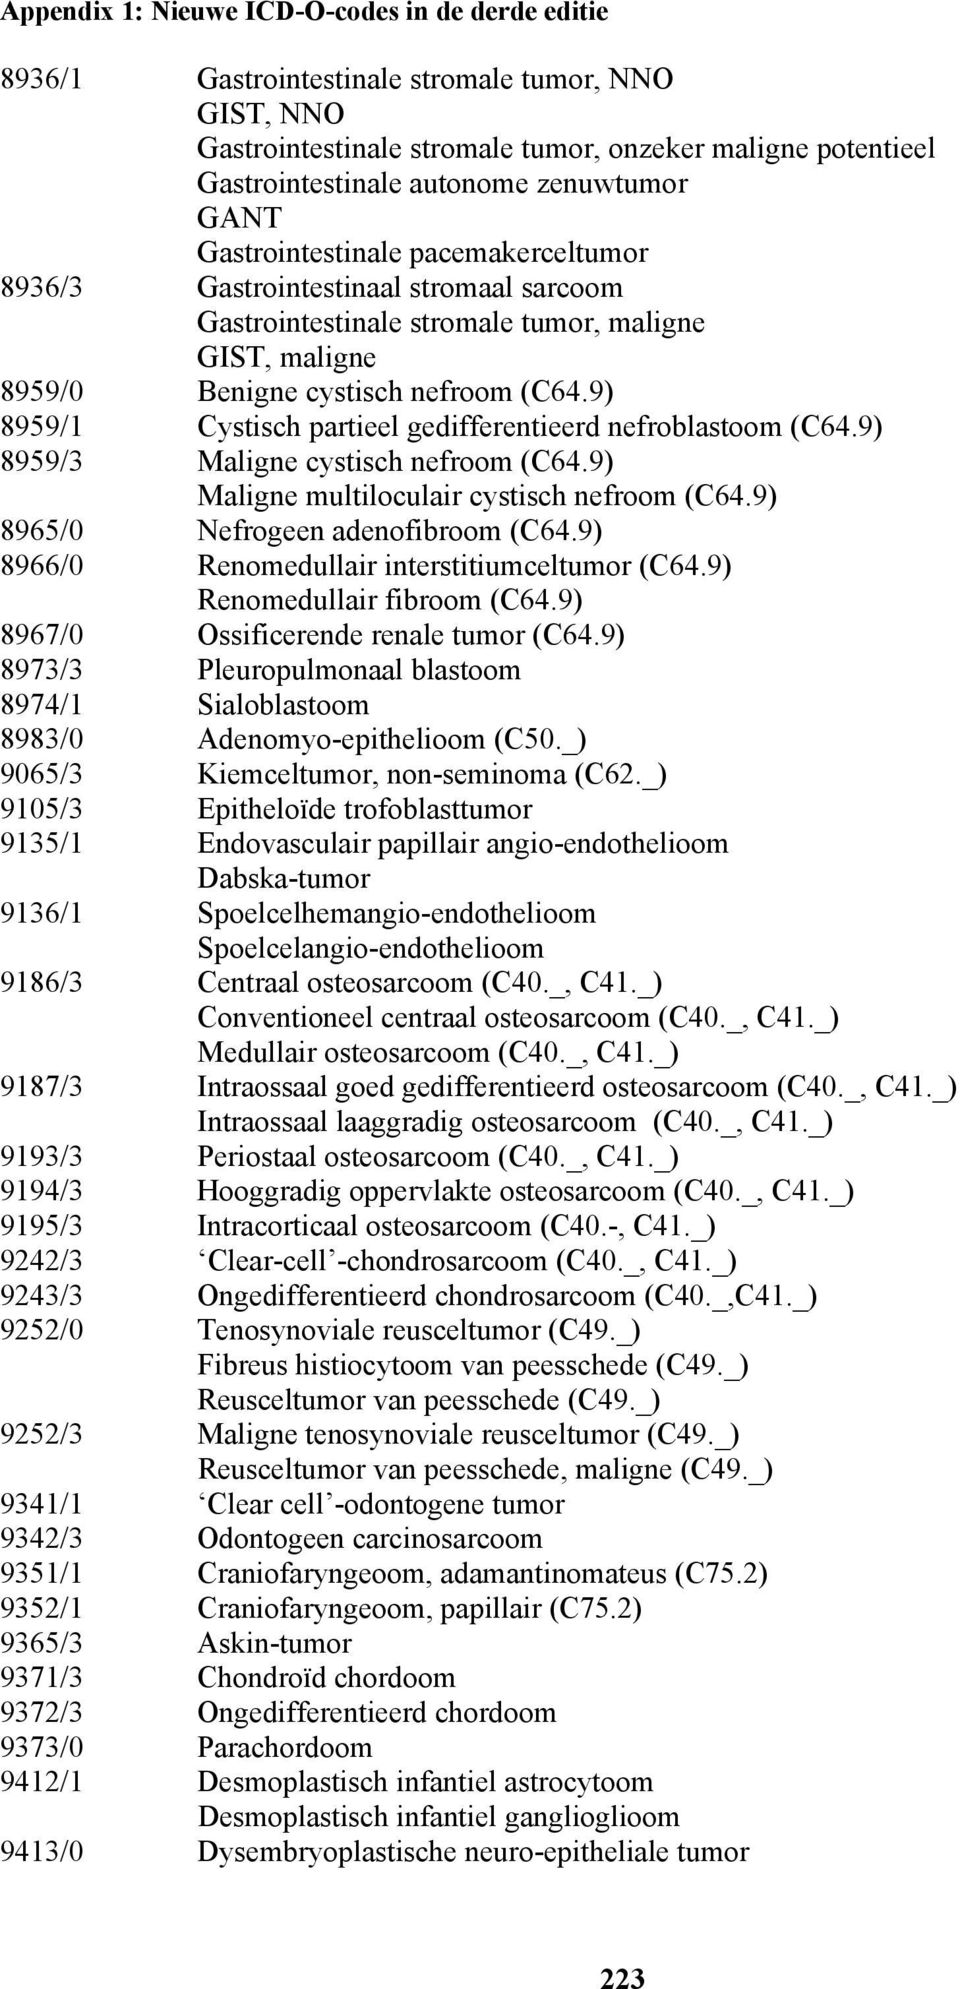 9) 8959/1 Cystisch partieel gedifferentieerd nefroblastoom (C64.9) 8959/3 Maligne cystisch nefroom (C64.9) Maligne multiloculair cystisch nefroom (C64.9) 8965/0 Nefrogeen adenofibroom (C64.